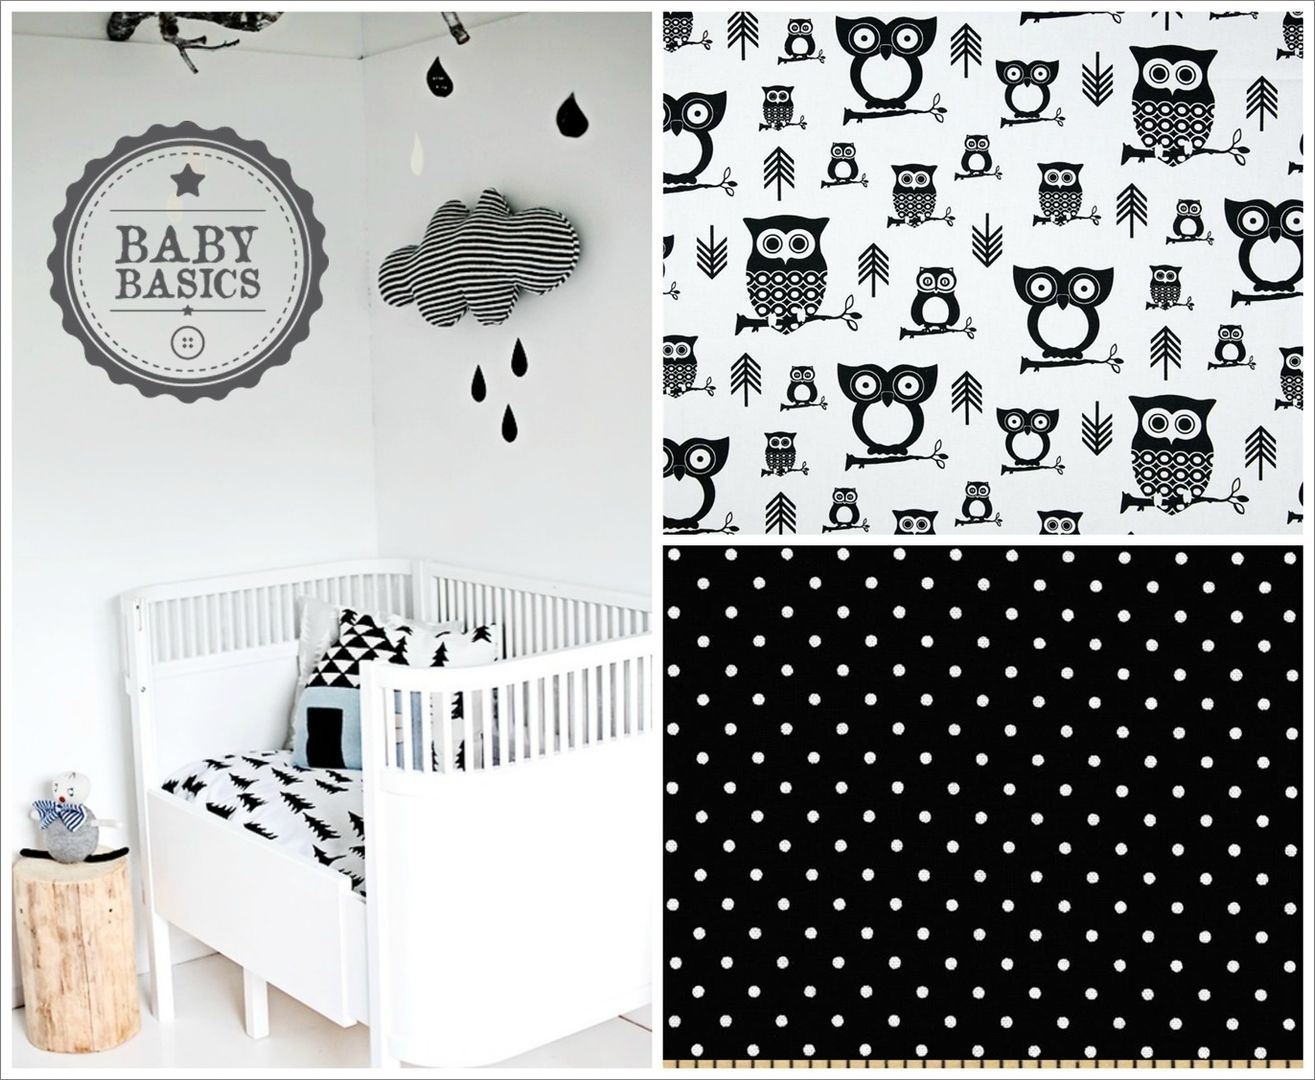 INSPÍRATE Y CREA TU PUF BABYBASICS, BabyBasics BabyBasics غرفة الاطفال Accessories & decoration